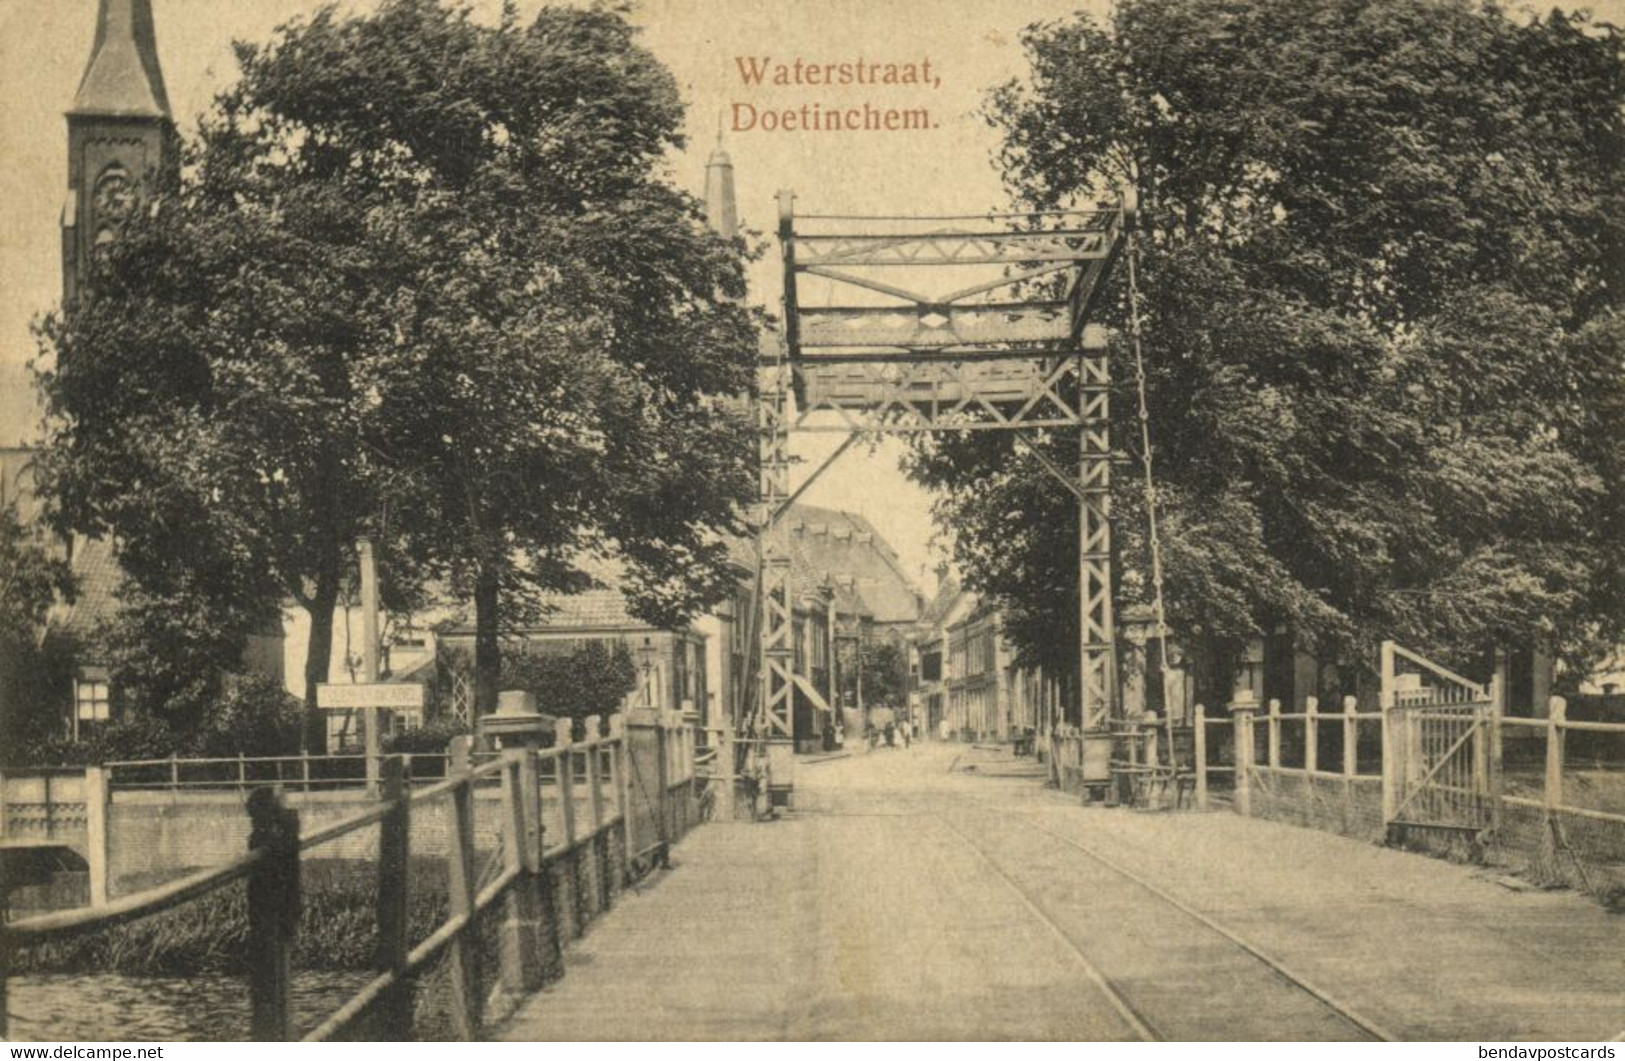 Nederland, DOETINCHEM, Waterstraat Met Ophaalbrug (1910s) Ansichtkaart - Doetinchem